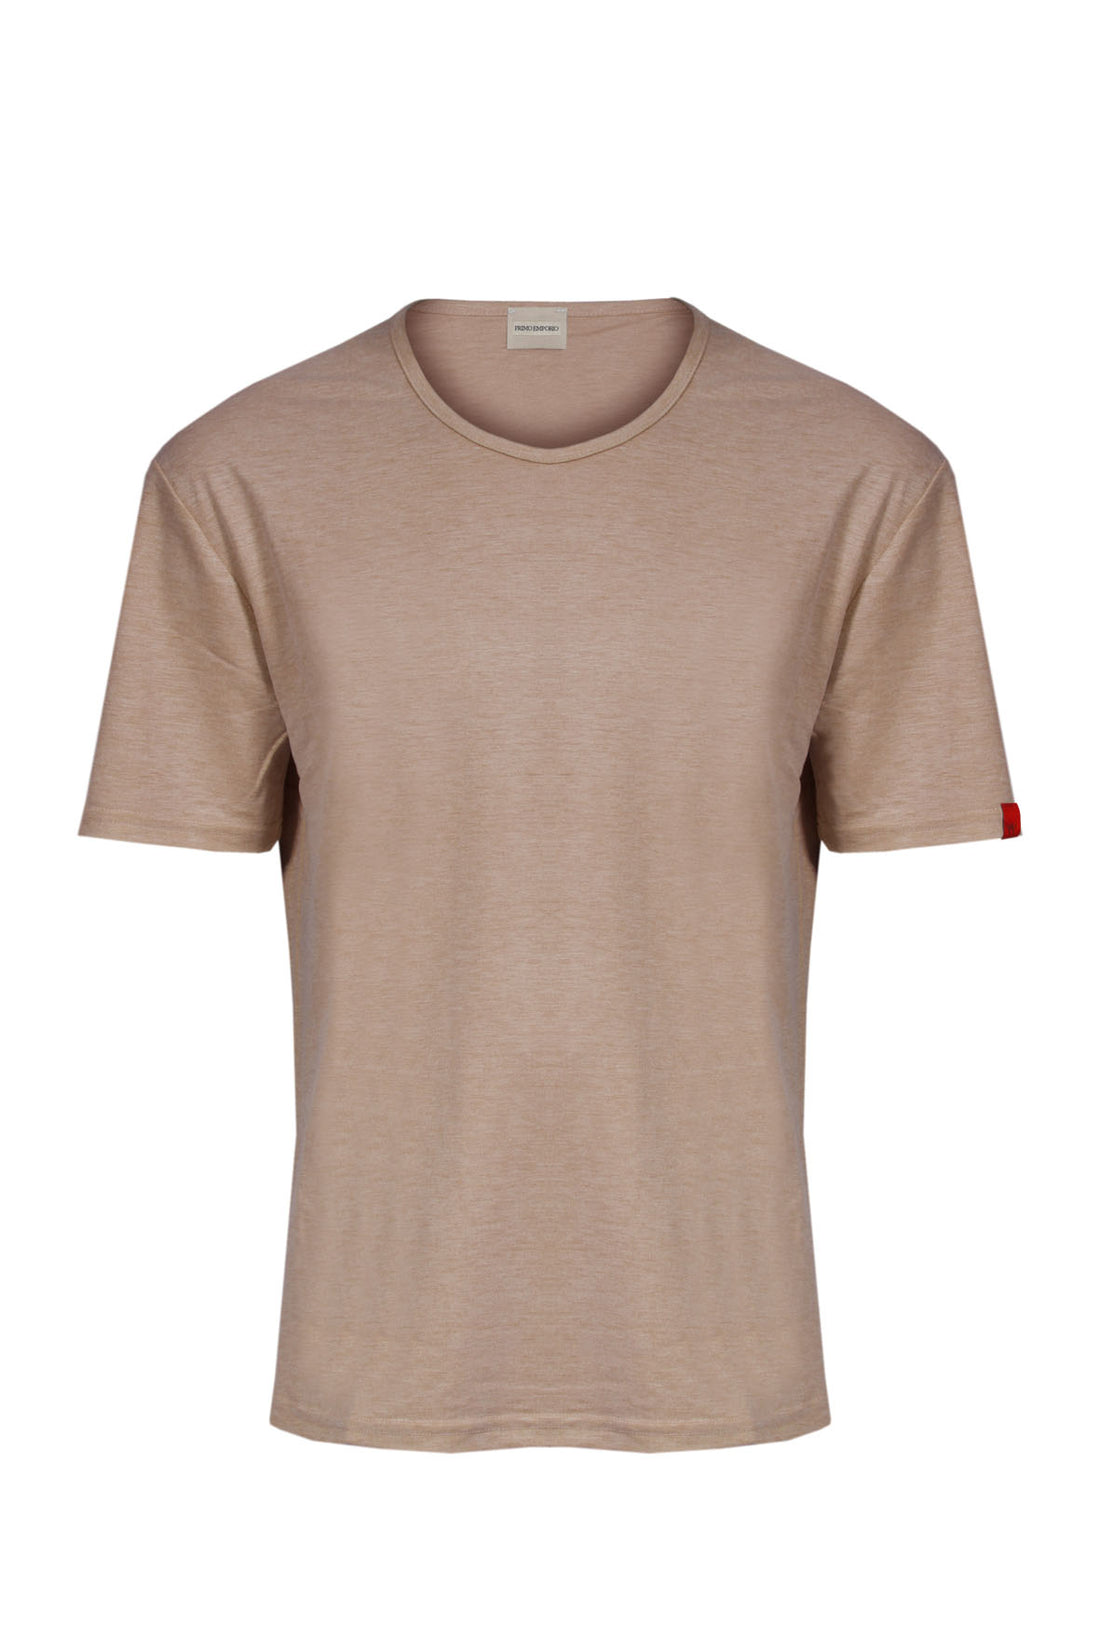 Oversized half-sleeve T-shirt - Camel